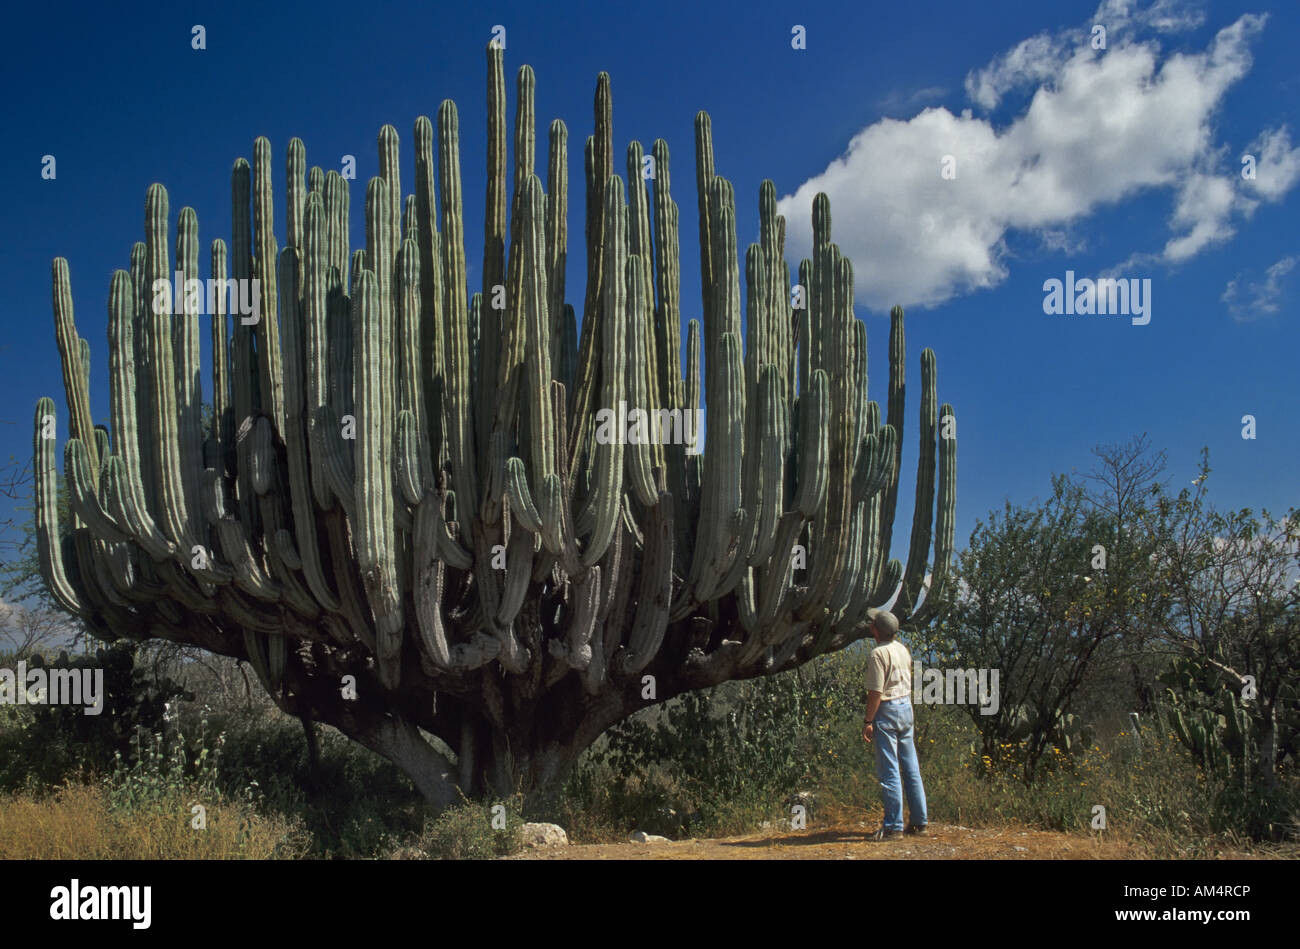 Man looking at giant cactus in desert near Teuhacan, Mexico Stock Photo